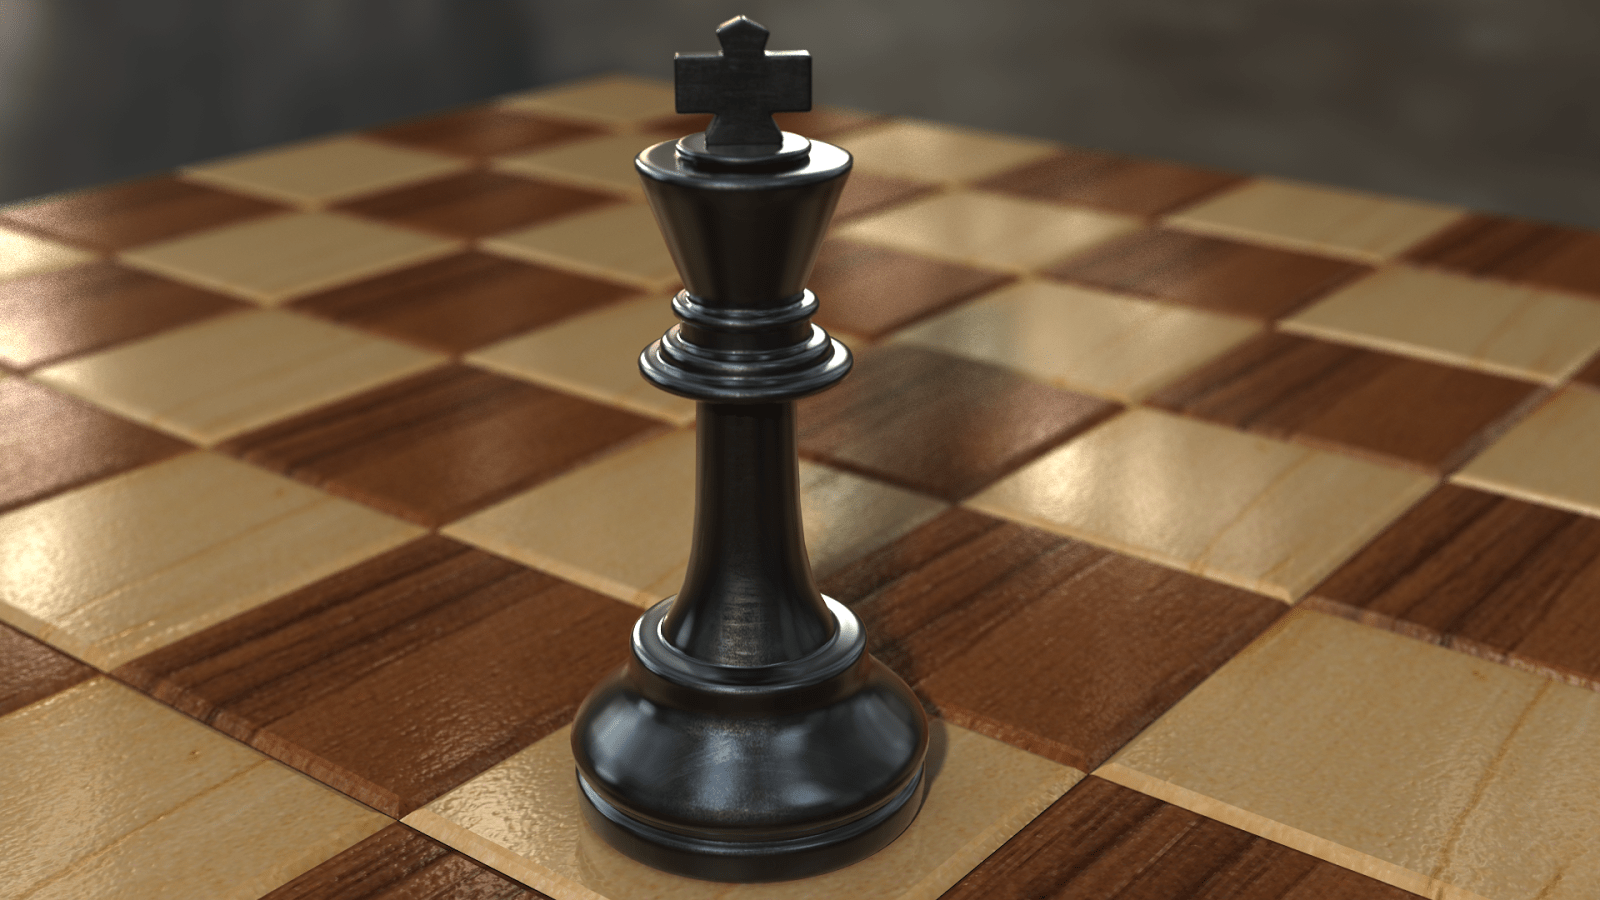 King Chess HD 4k wallpaper by Rashmikalinga - Download on ZEDGE